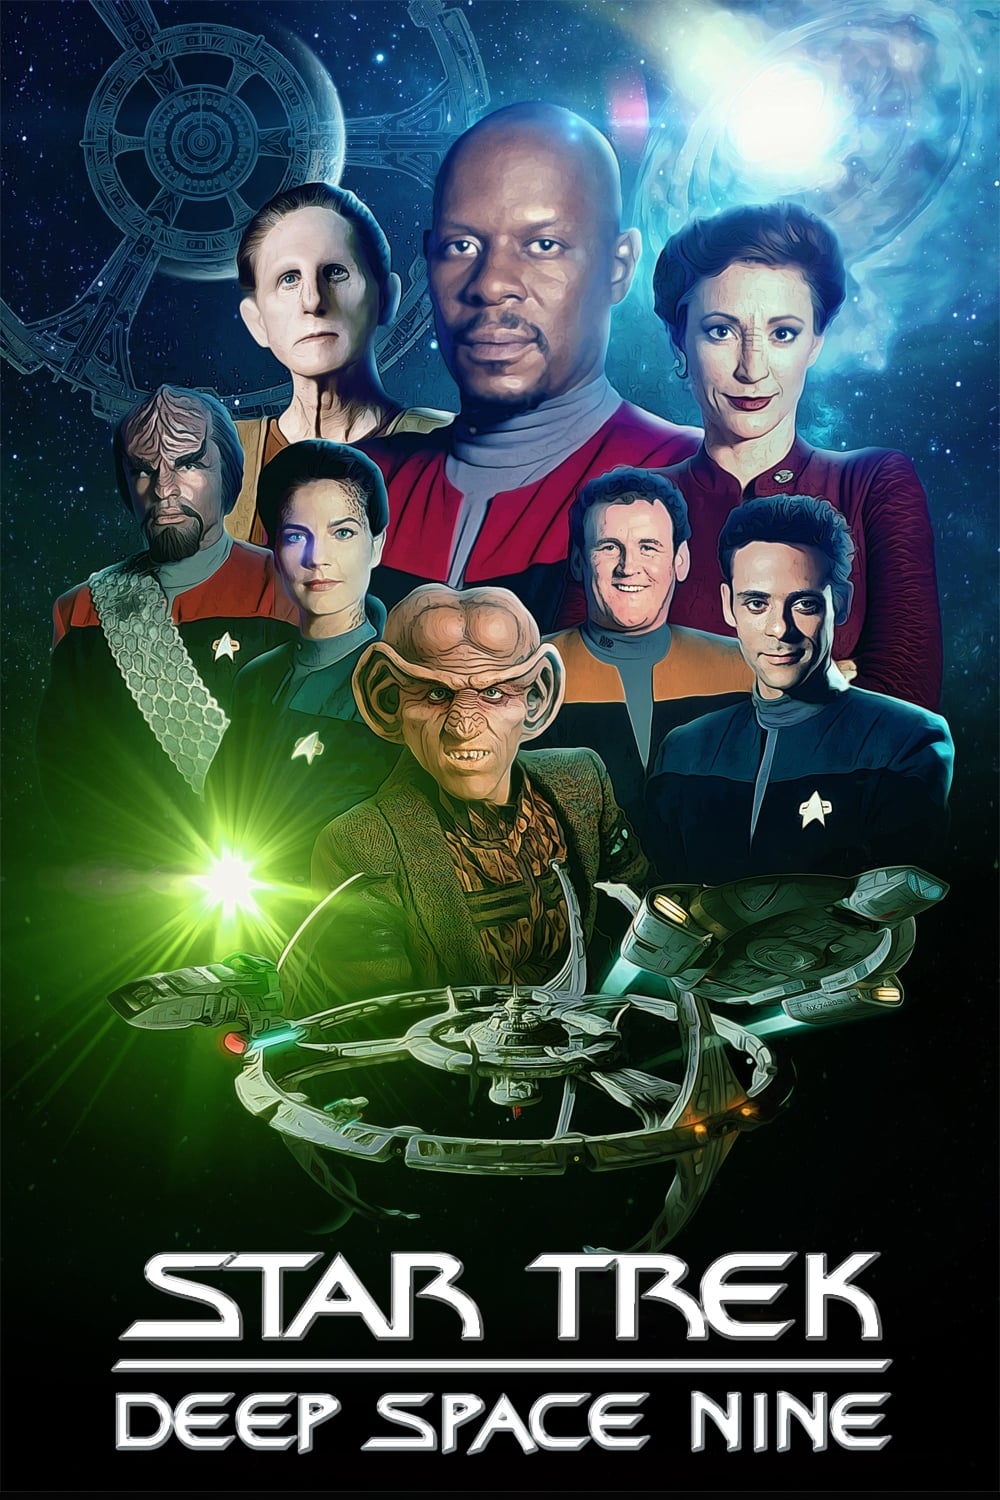 Star Trek: Deep Space Nine TV Shows About 24th Century